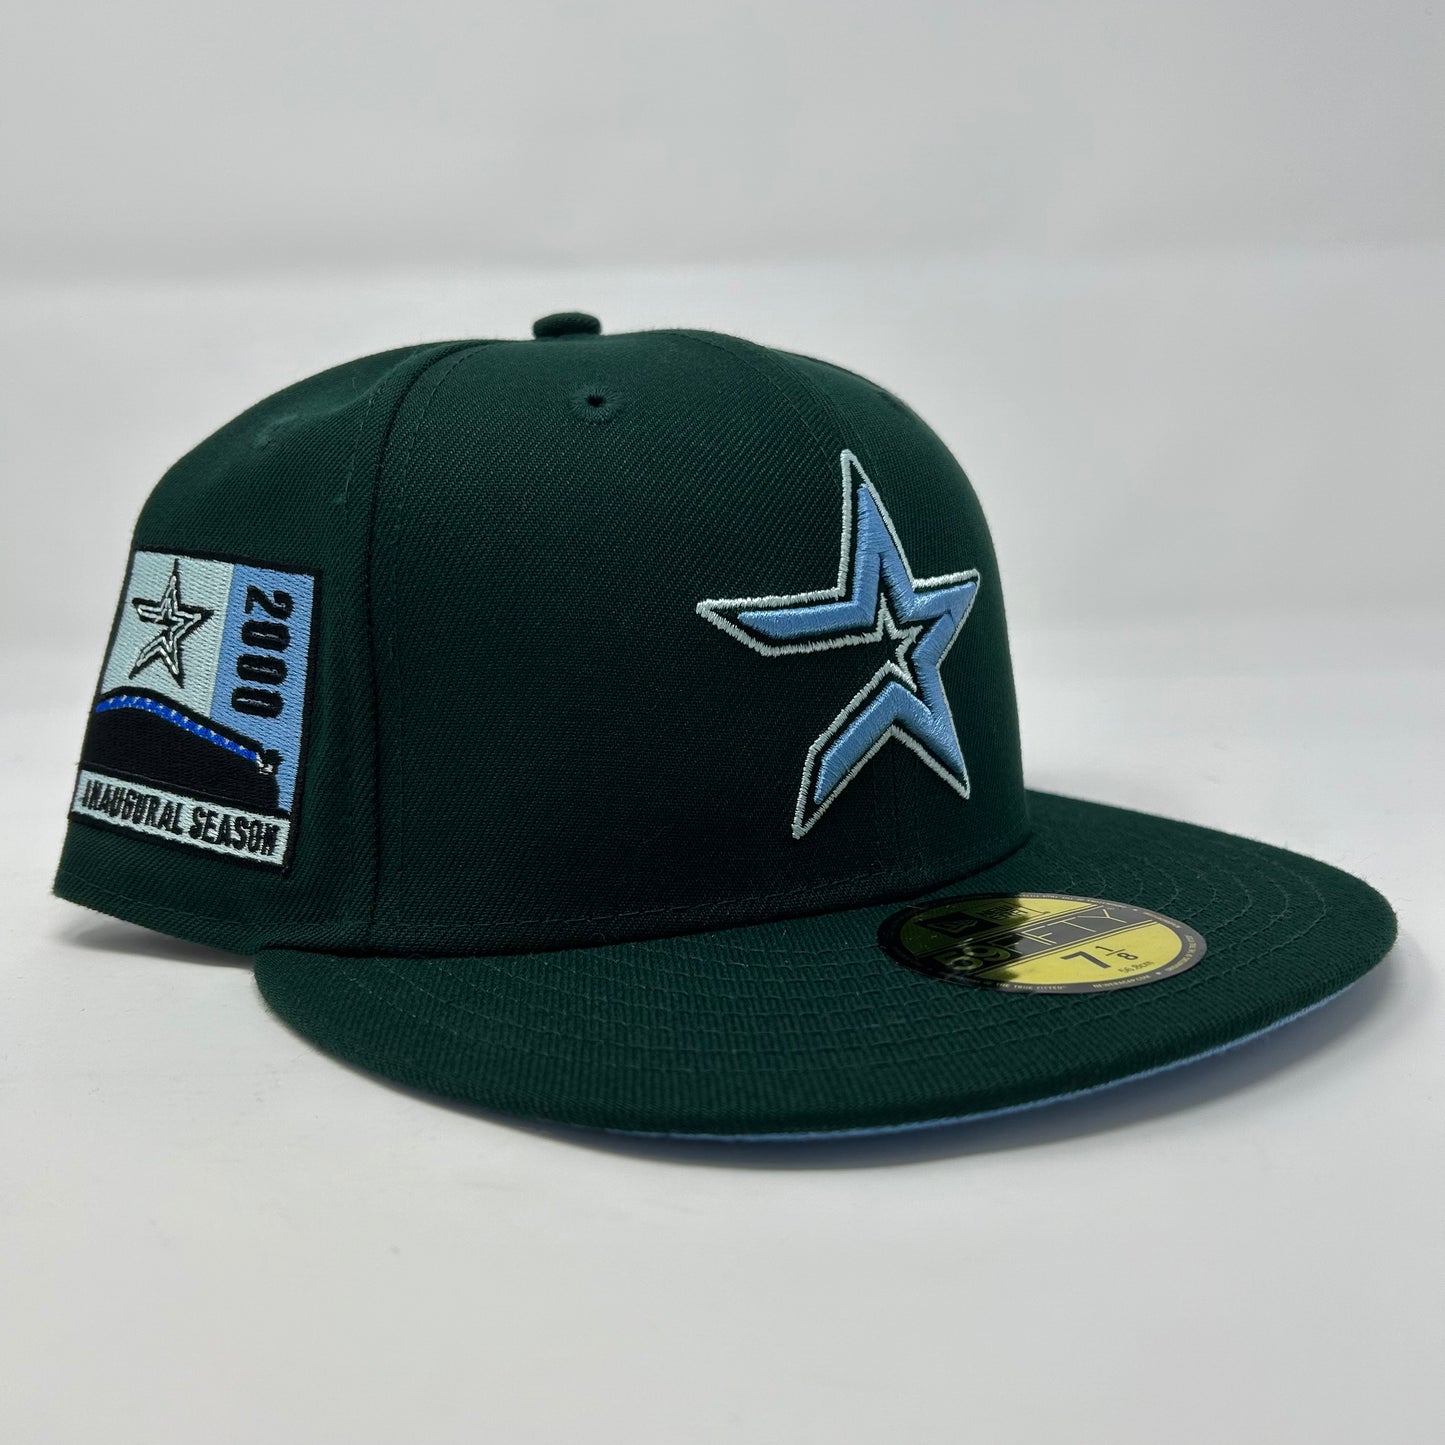 Houston Astros “Green Icy” Hat